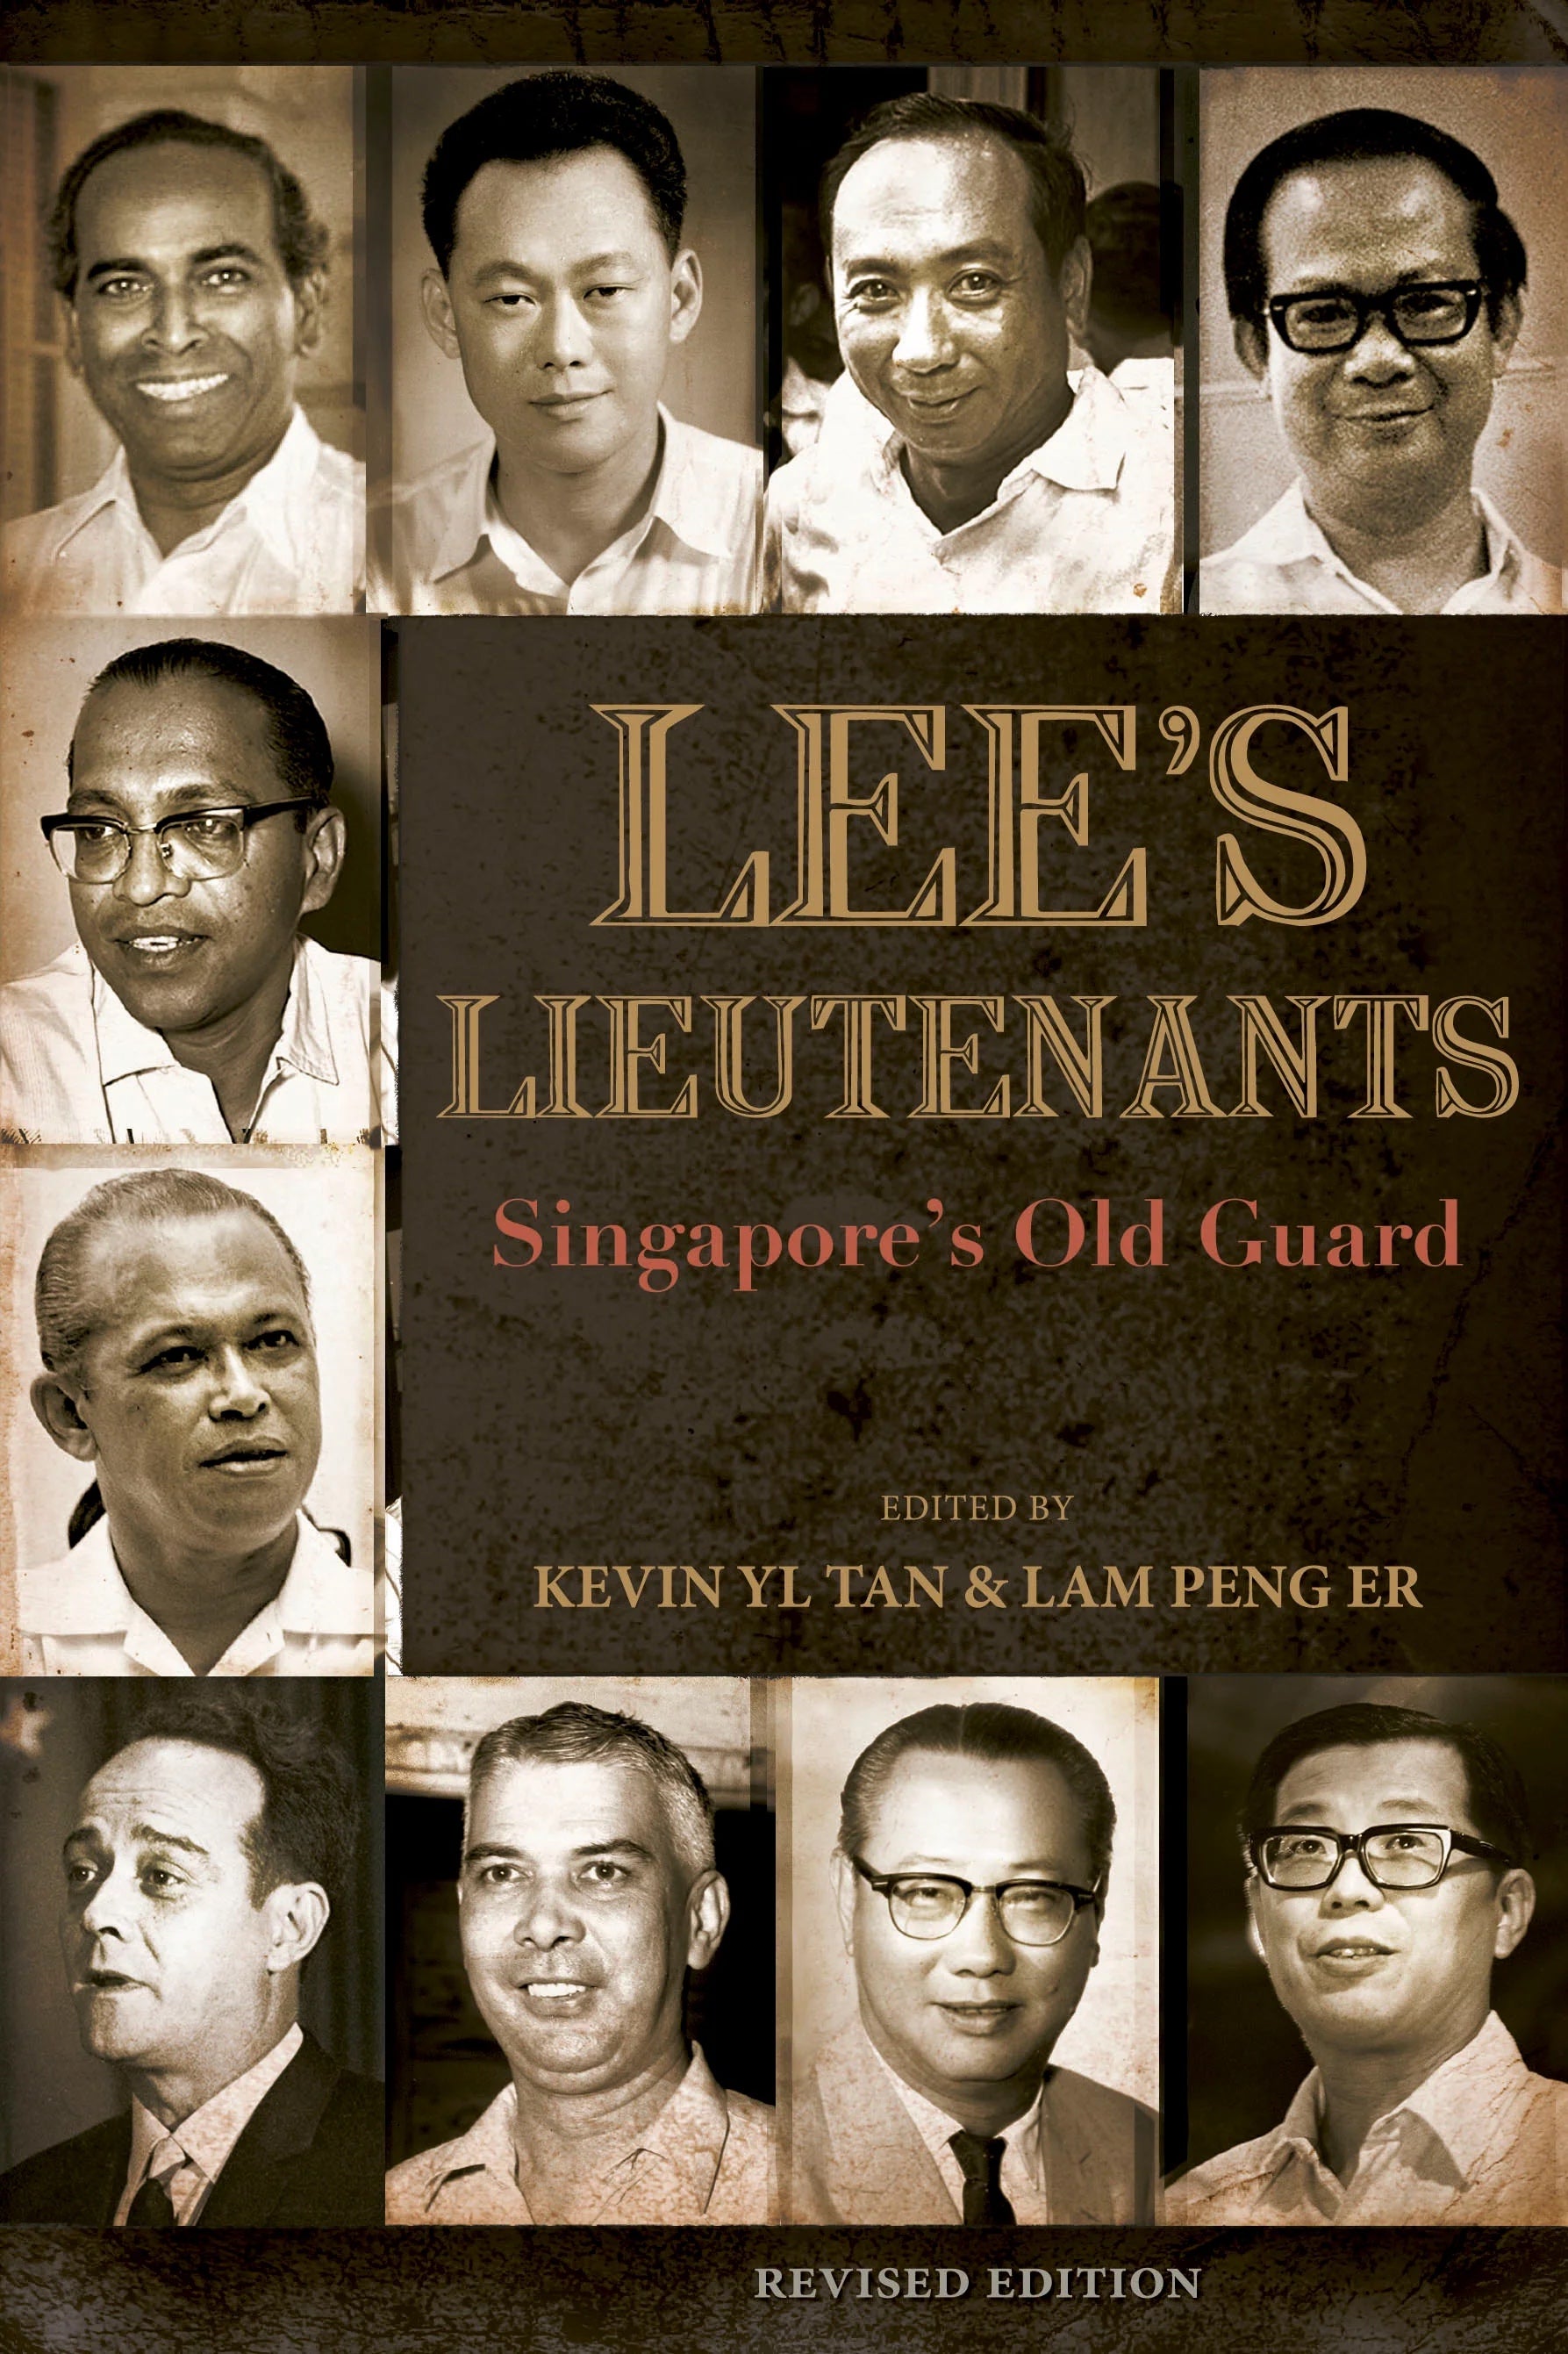 Lee's Lieutenants: Singapore's Old Guard (Revised Edition)